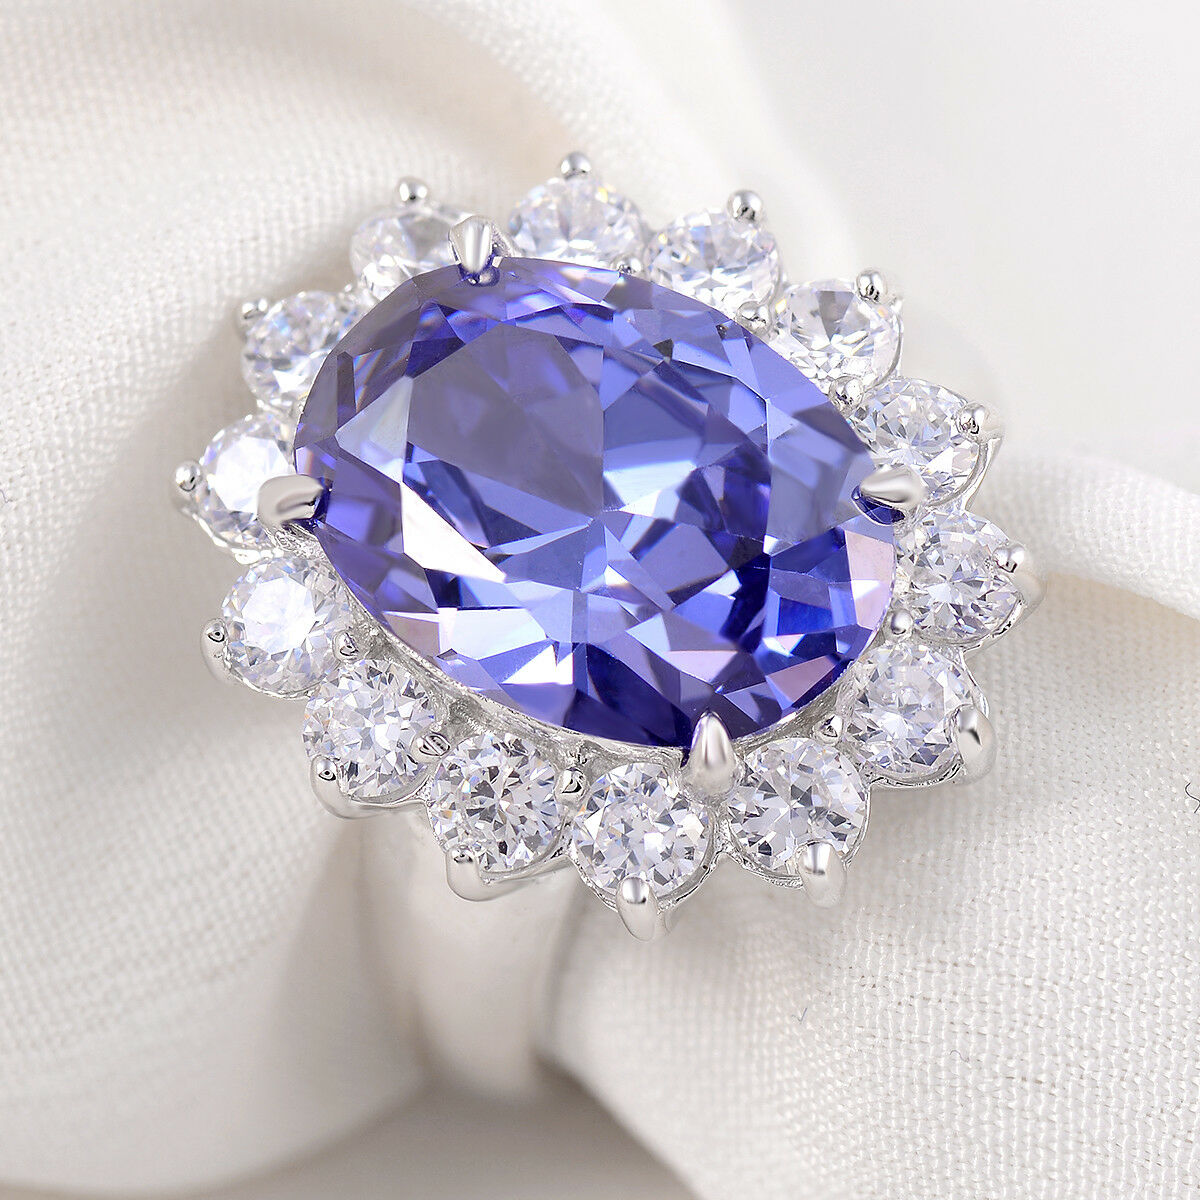 6.42 Ct Blue Tanzanite White Topaz 925 Sterling Silver Gemstone Ring Size 5-12